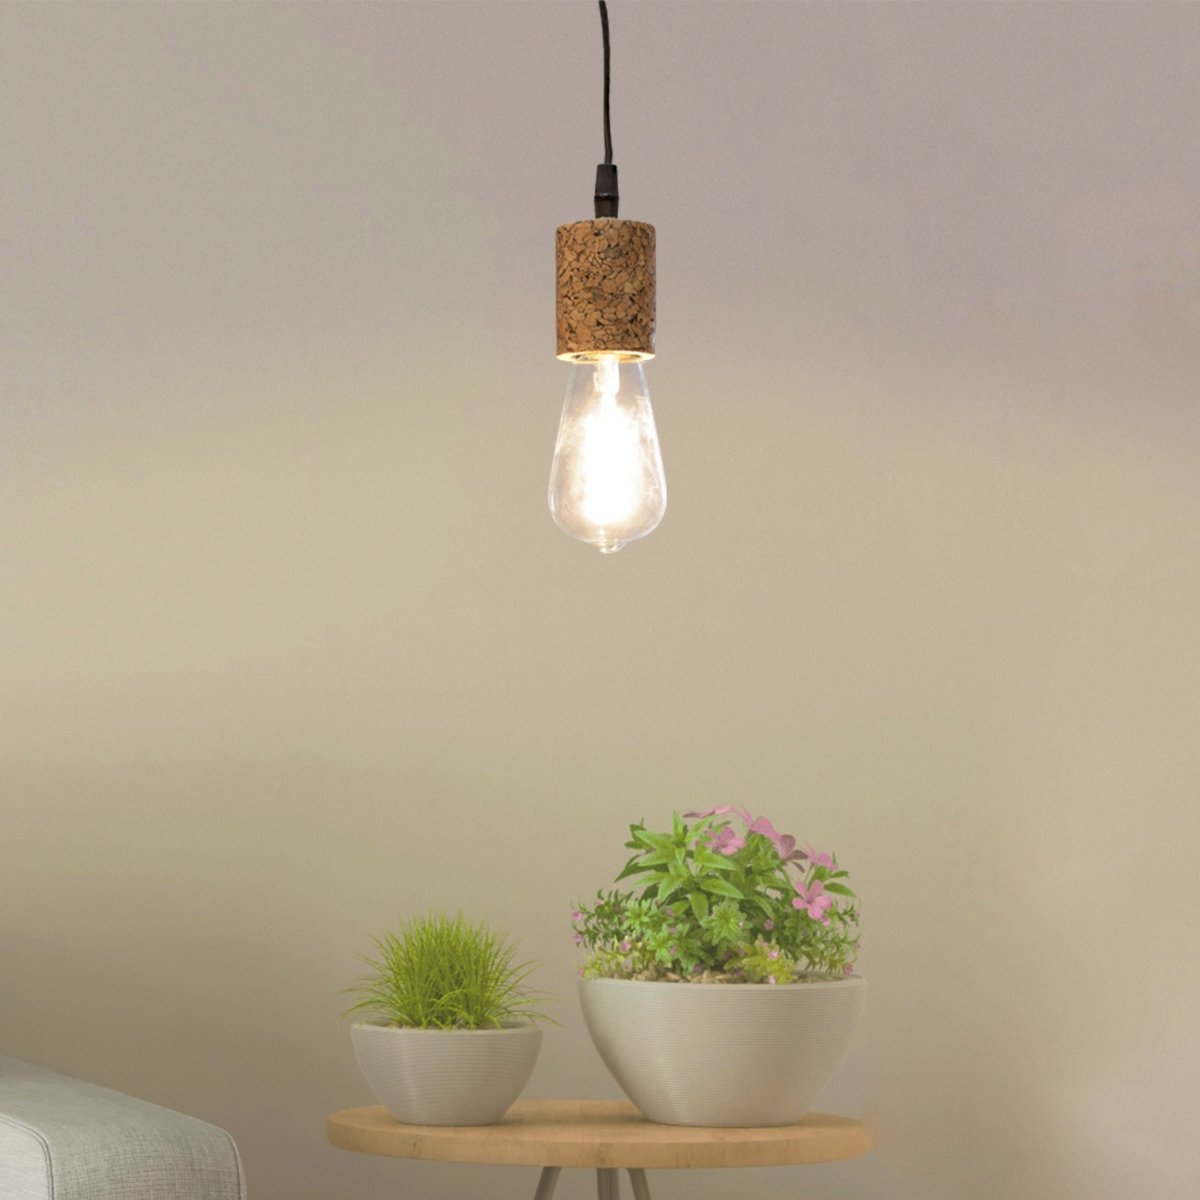 Kezevel Cork Decorative Hanging Light - Natural Cork Brown Cylindrical Lamp for Living Room, Balcony, Foyer, Bedroom Kitchen